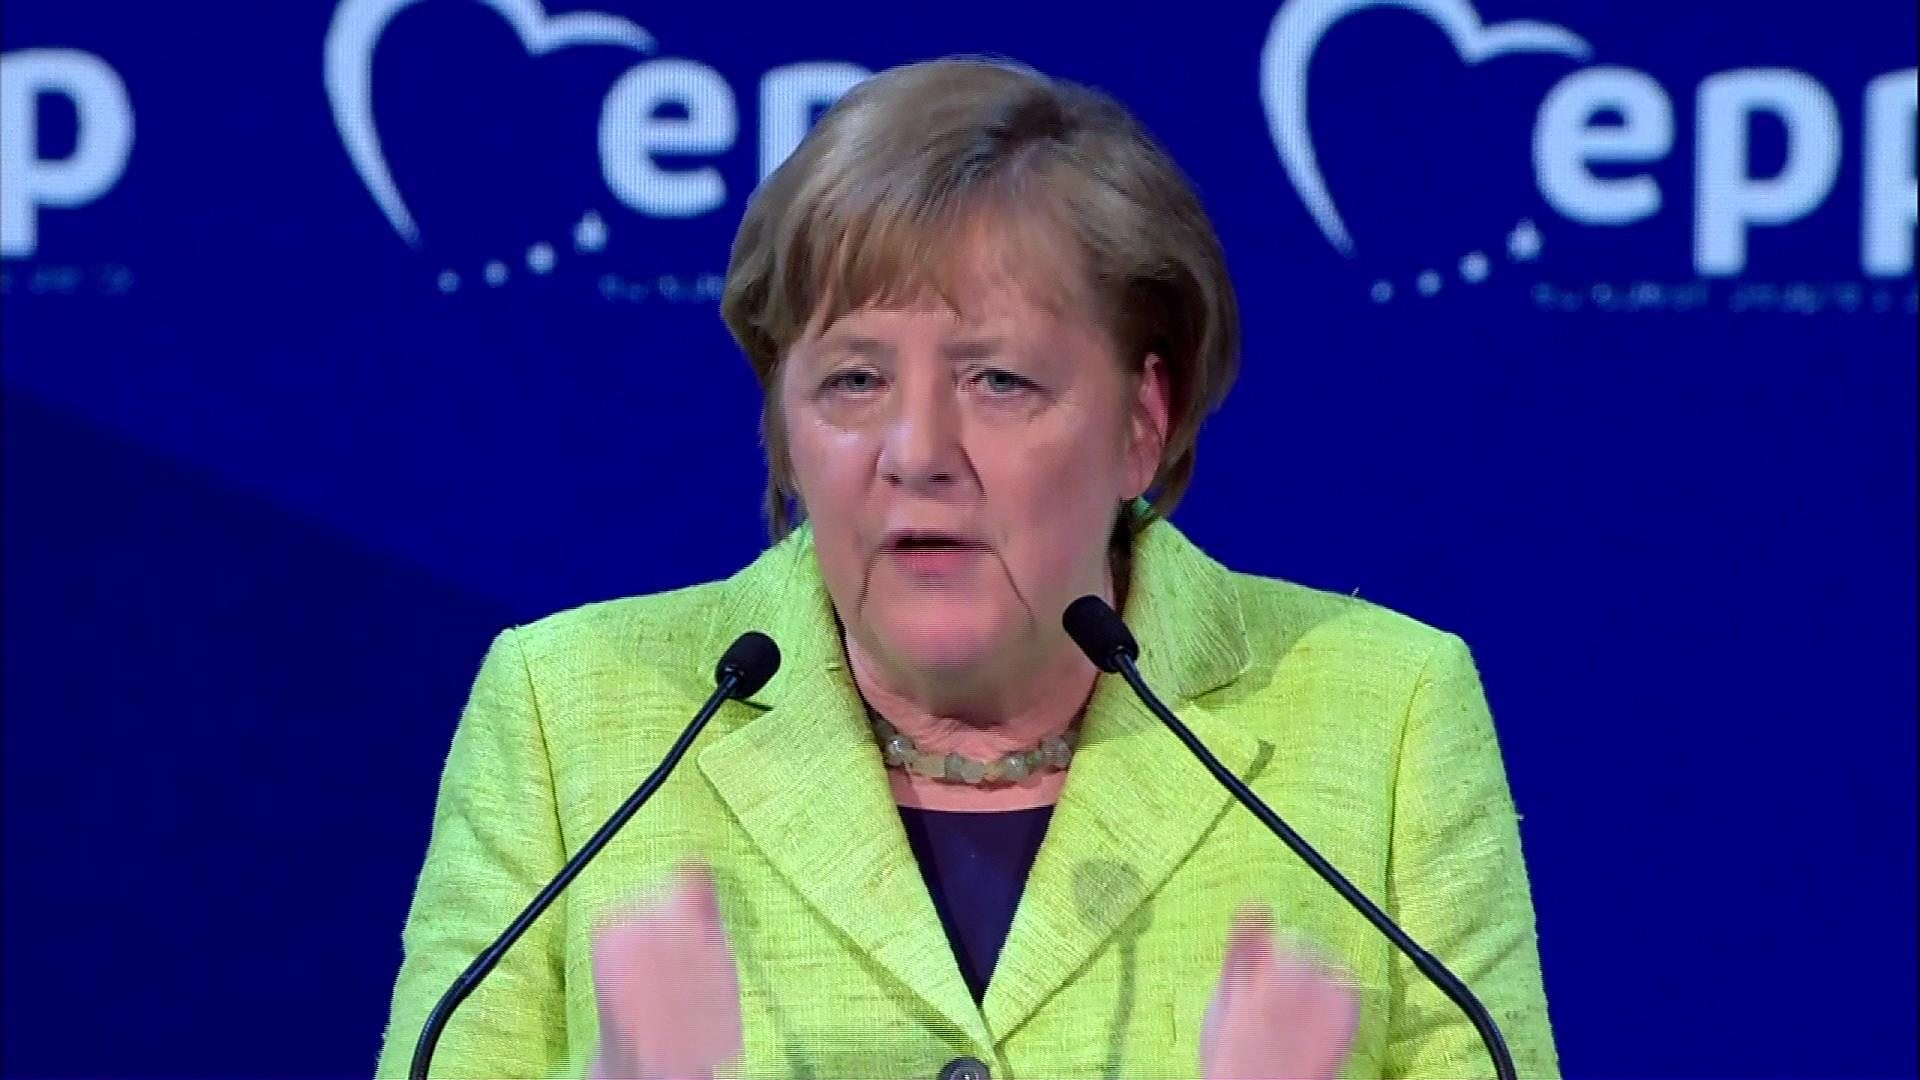 Merkel Topless Image